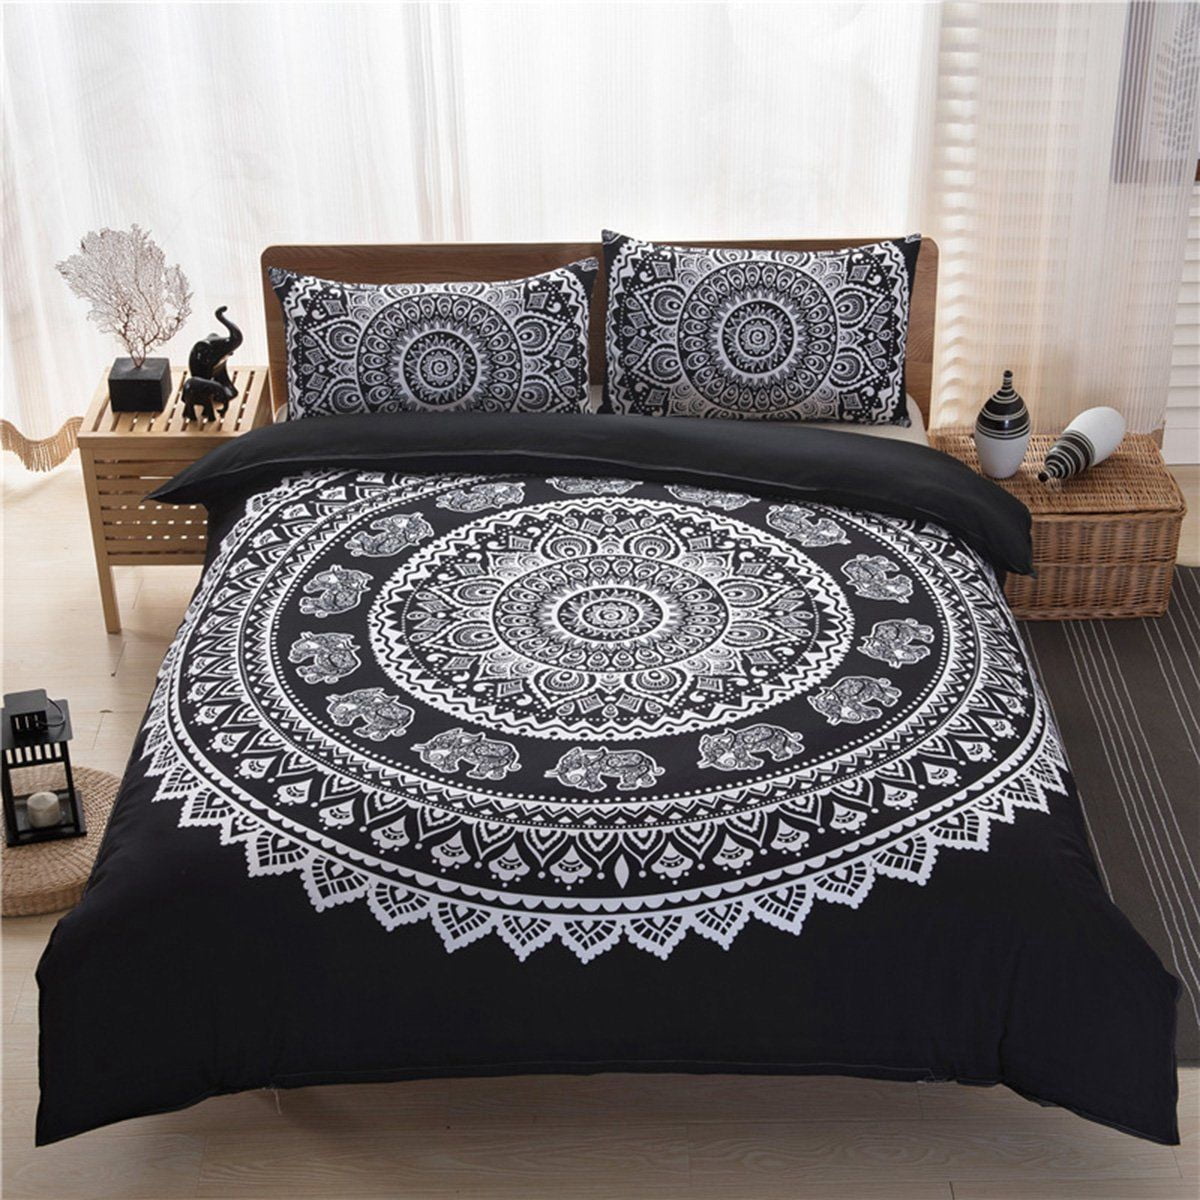 image: Meigar King Bedding Comforter Set, Bohemian Indian Mandala Hippie Duvet Quilt Cover with Pillow Case Bedding Set